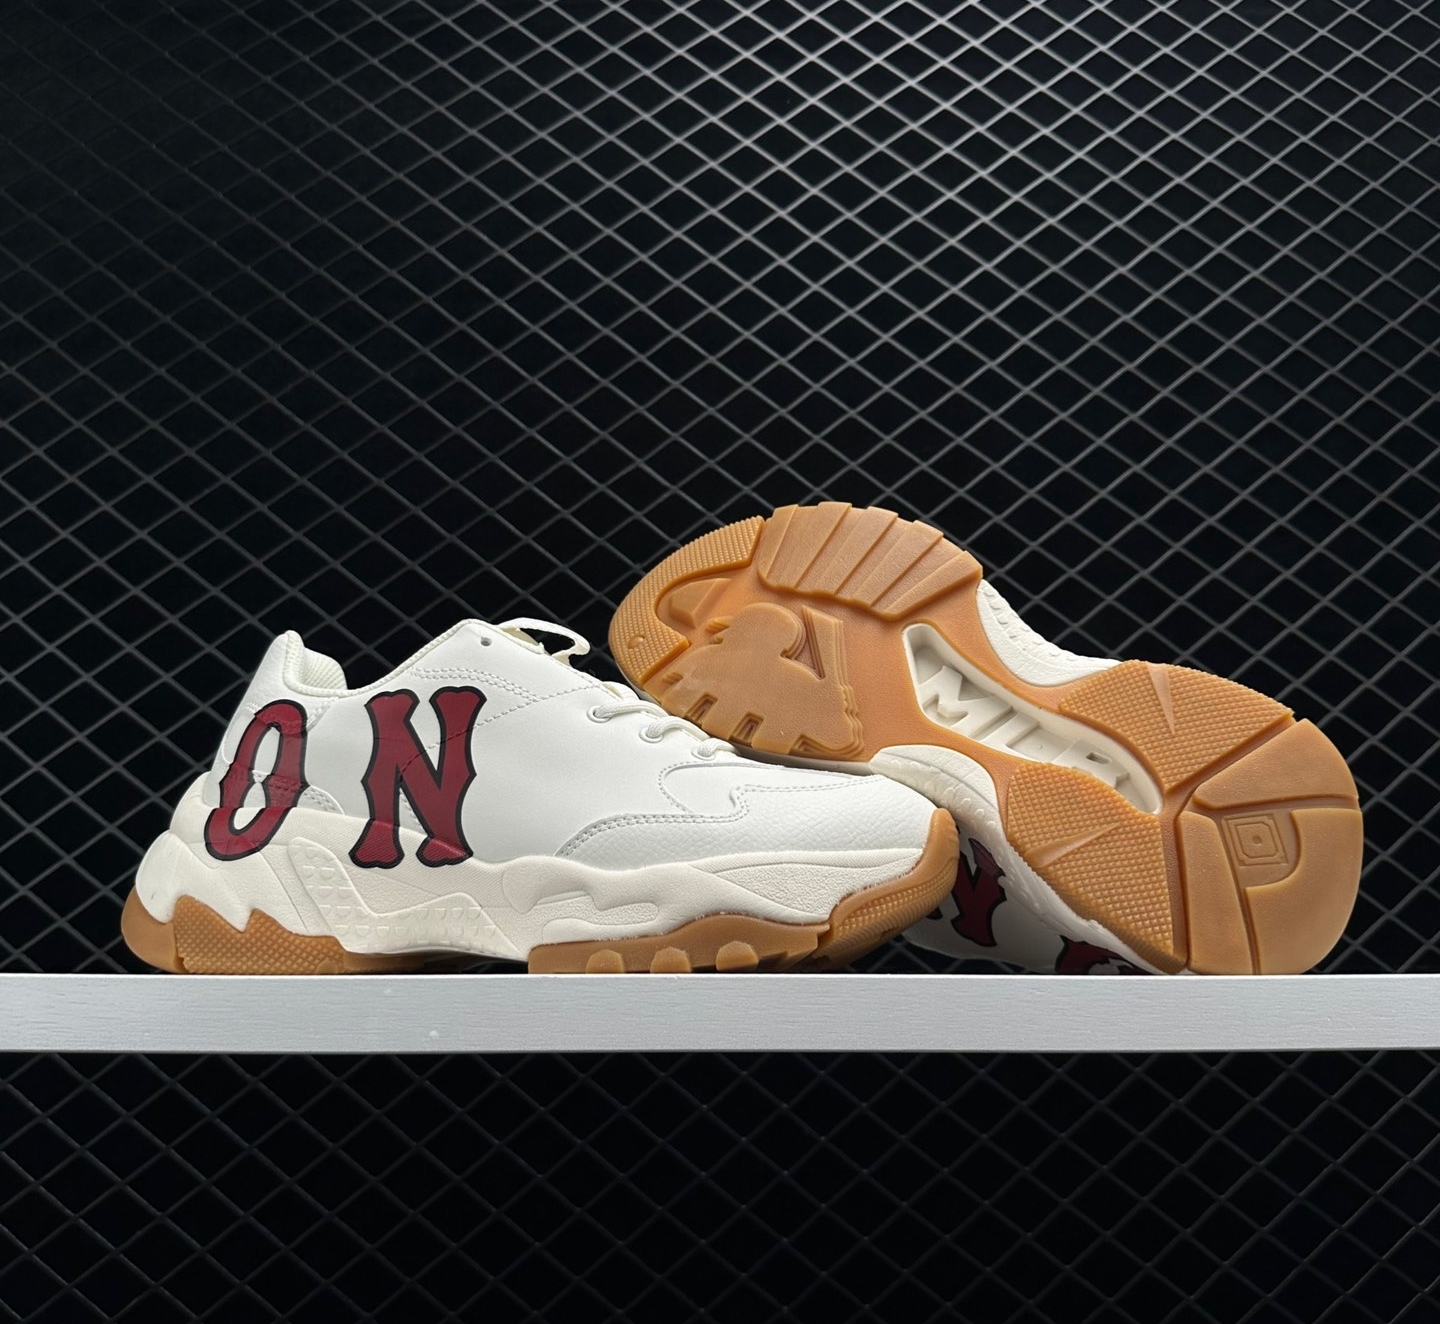 MLB KOREA Bigball Chunky P NY Sneakers Shoes - White Red 3ASHC2B2N-43RDS